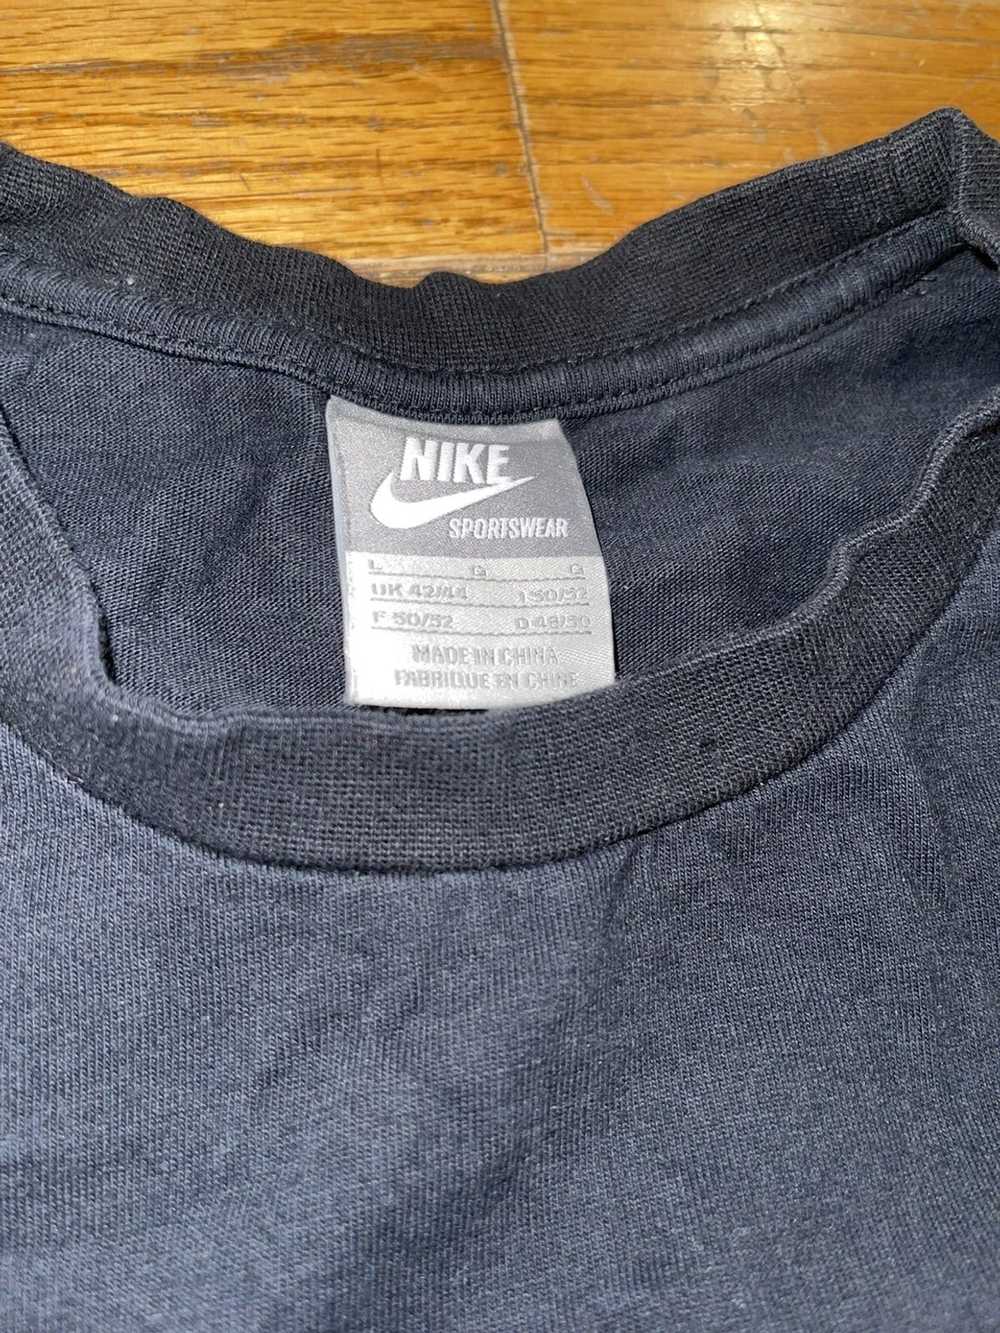 Nike Nike Air x Be True x Orangemen RARE t-shirt - image 3